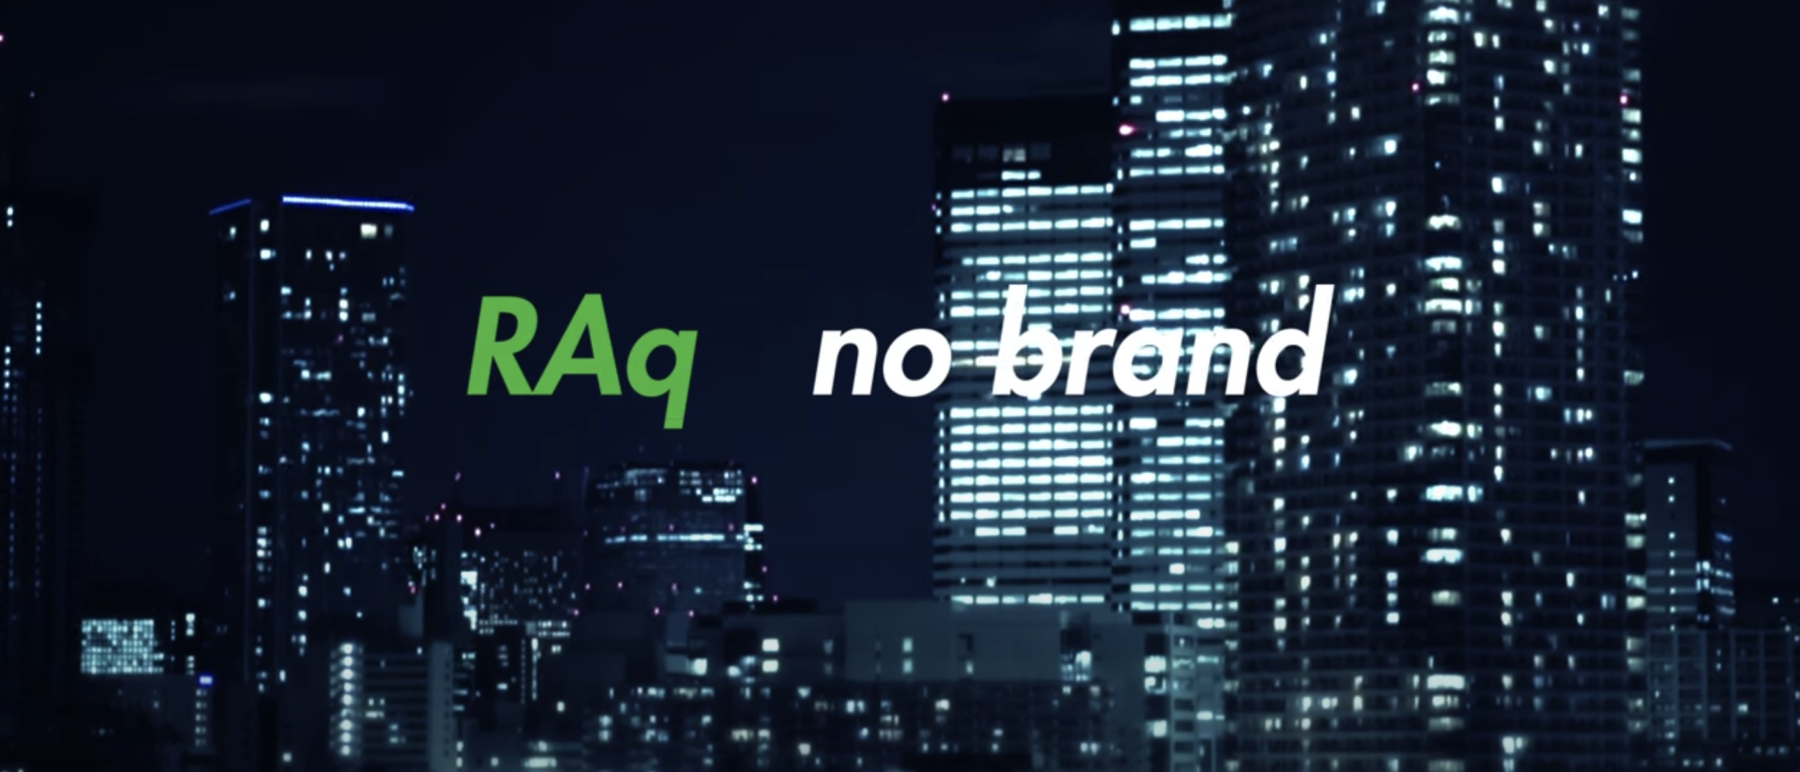 Music Video - no brand by RAq